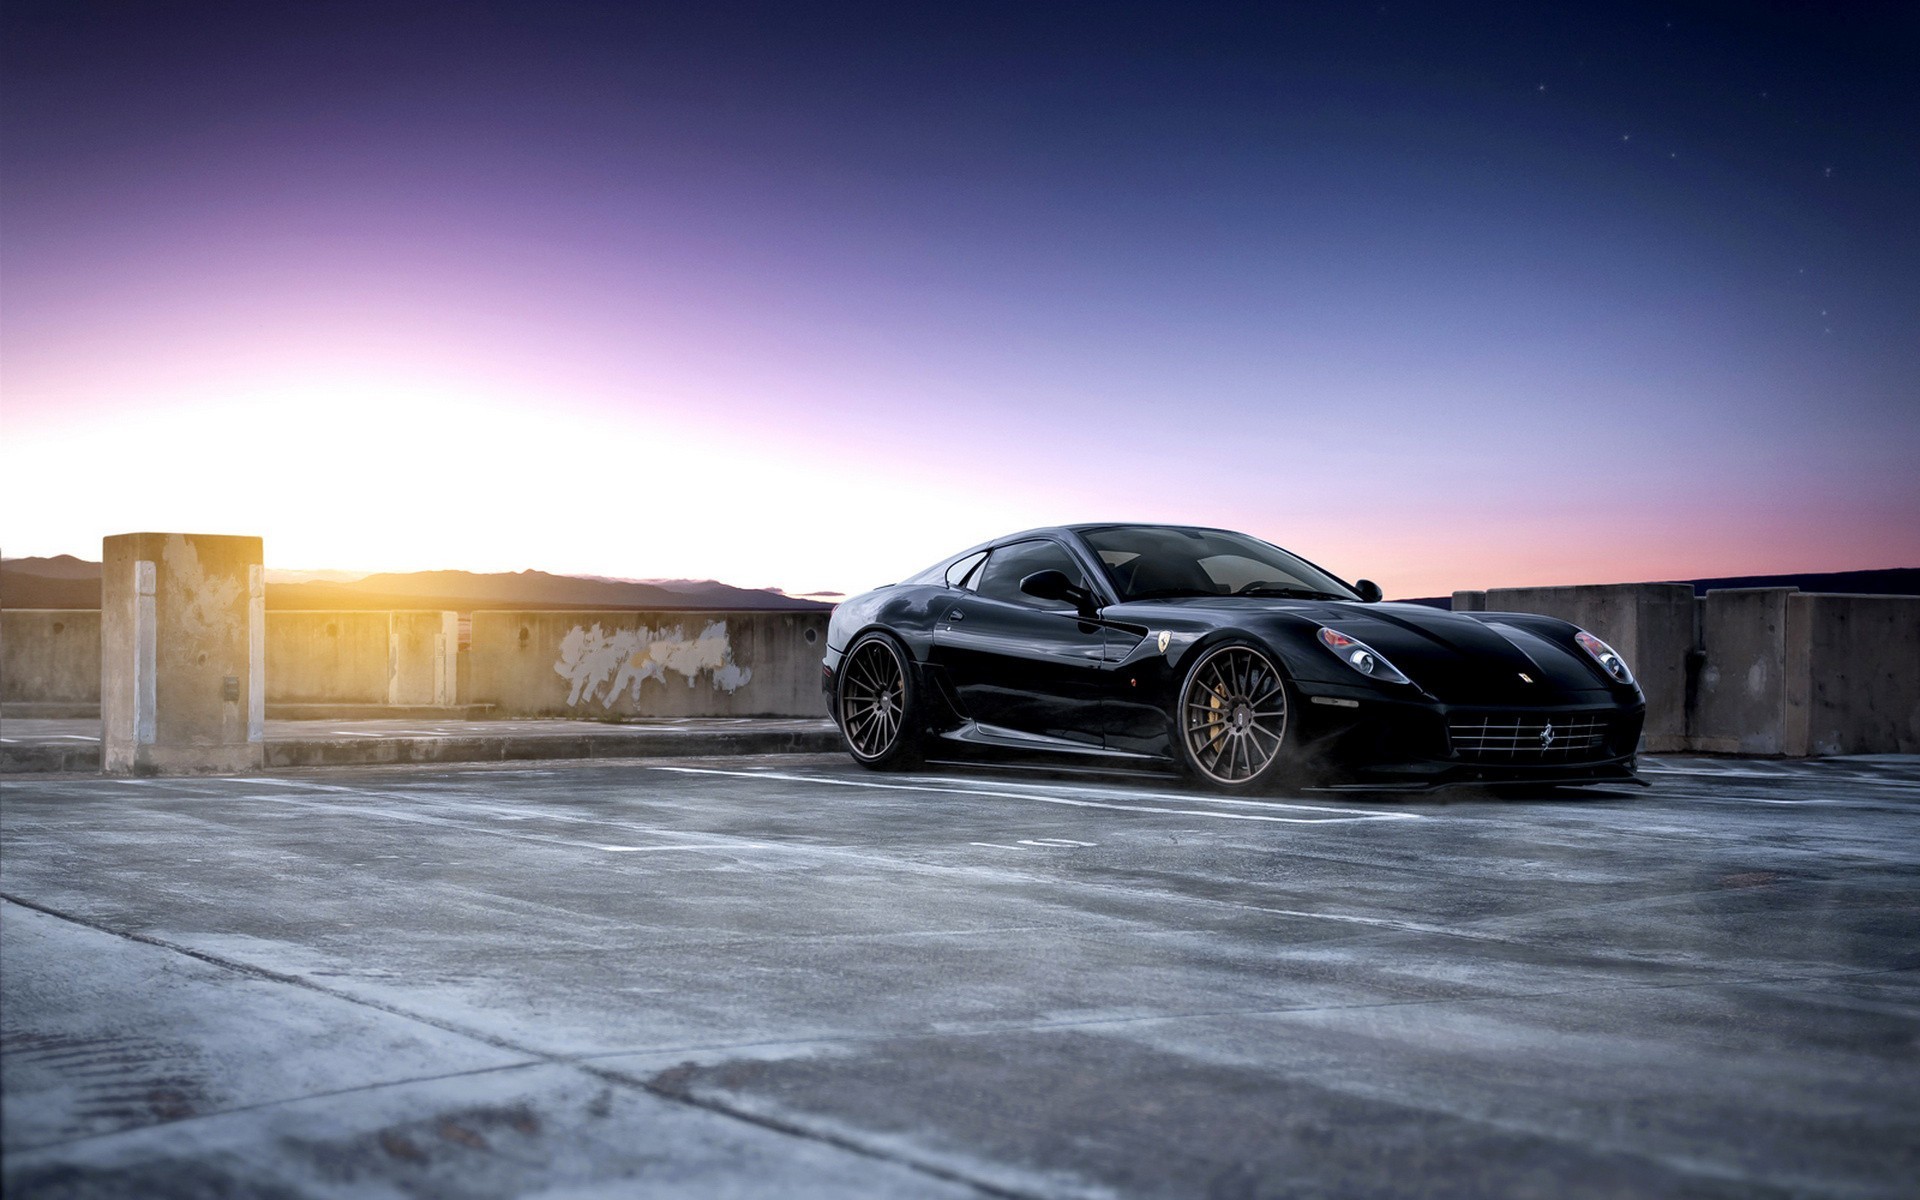 Black ferrari 599 on cool spoked rims